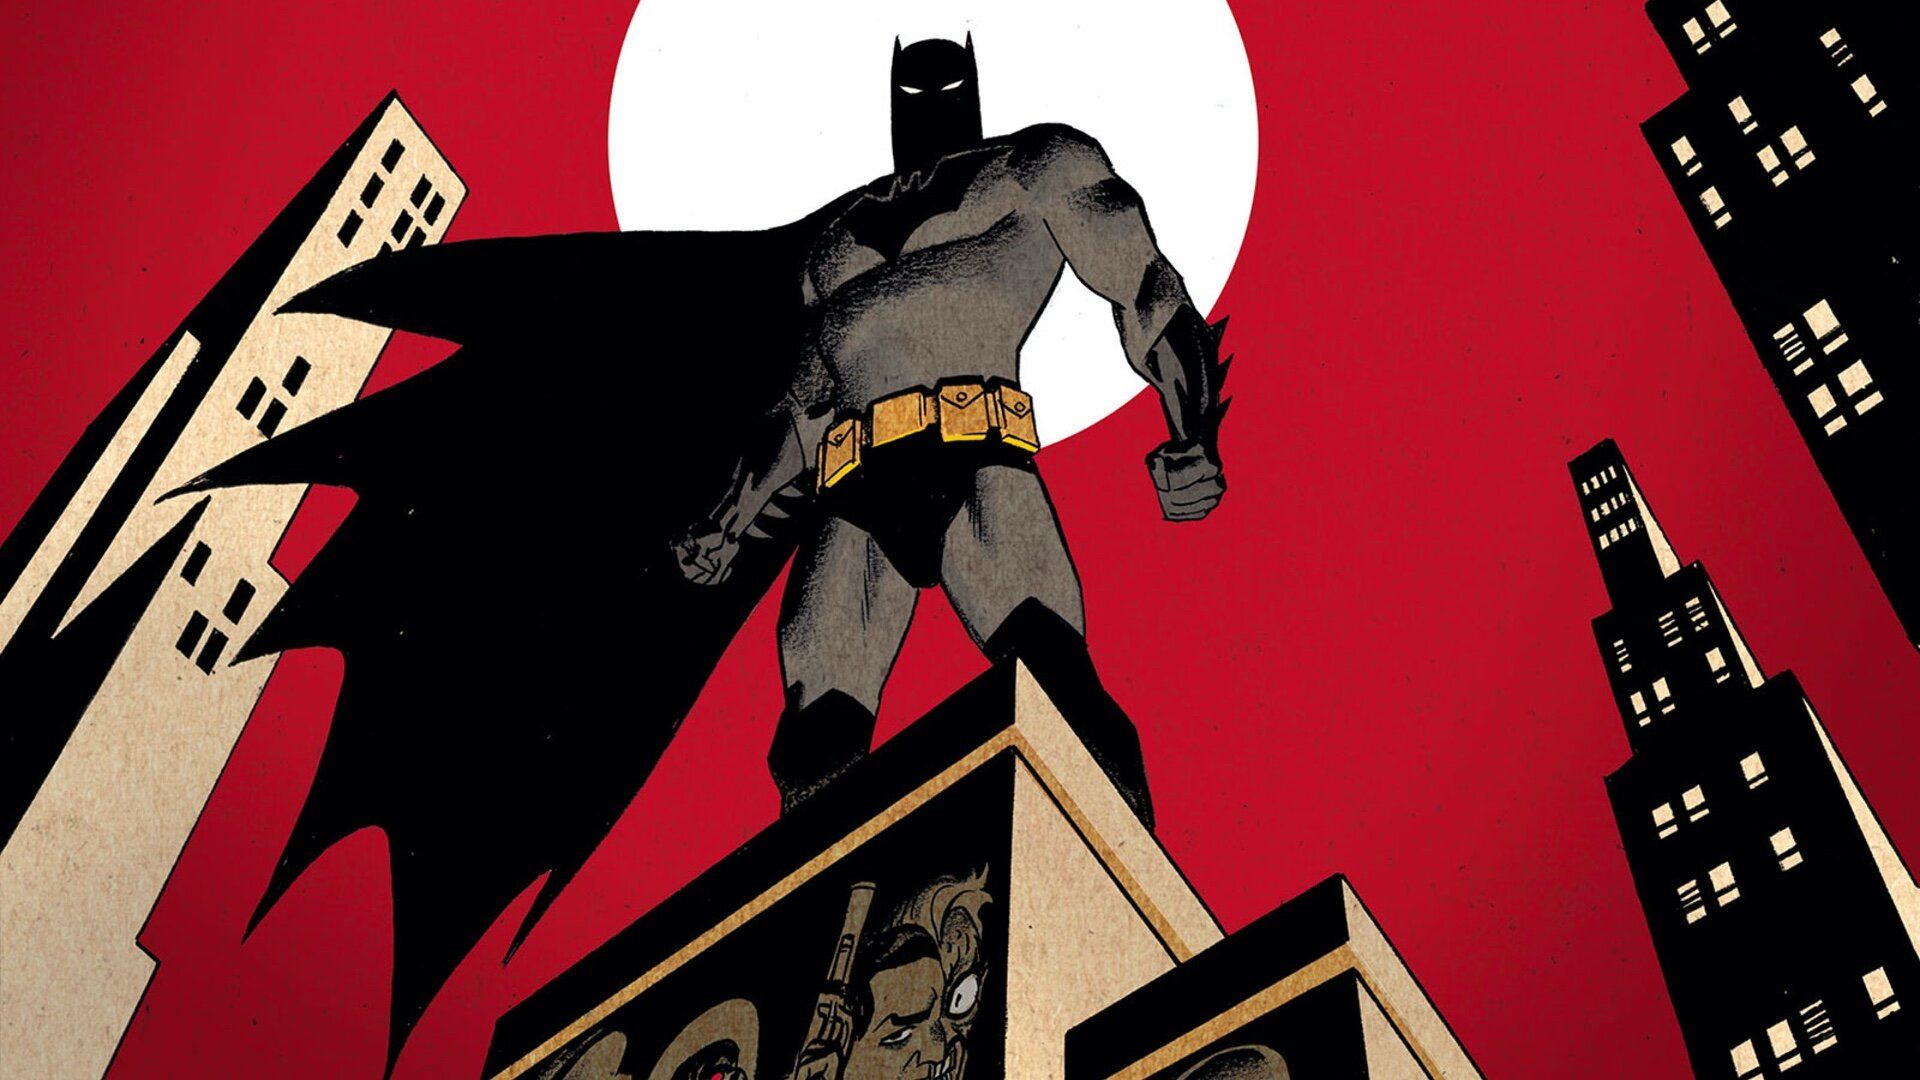 Batman Dc Comic New 2020 Wallpapers